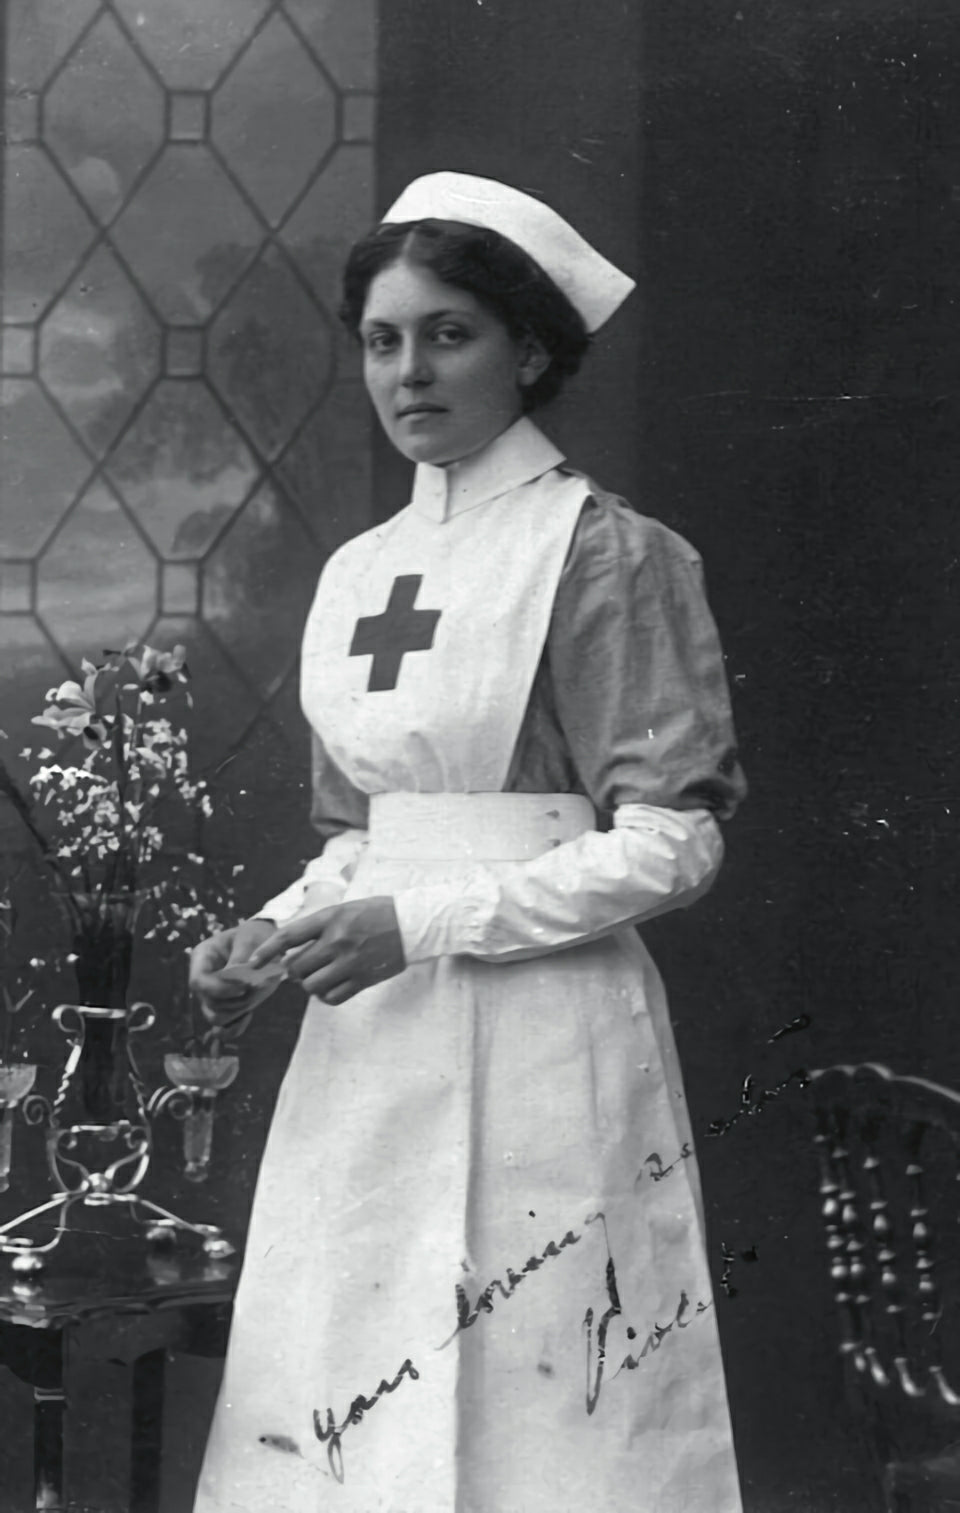 Nurse Violet Jessop:  “Miss Unsinkable” “Queen of Sinking Ships”